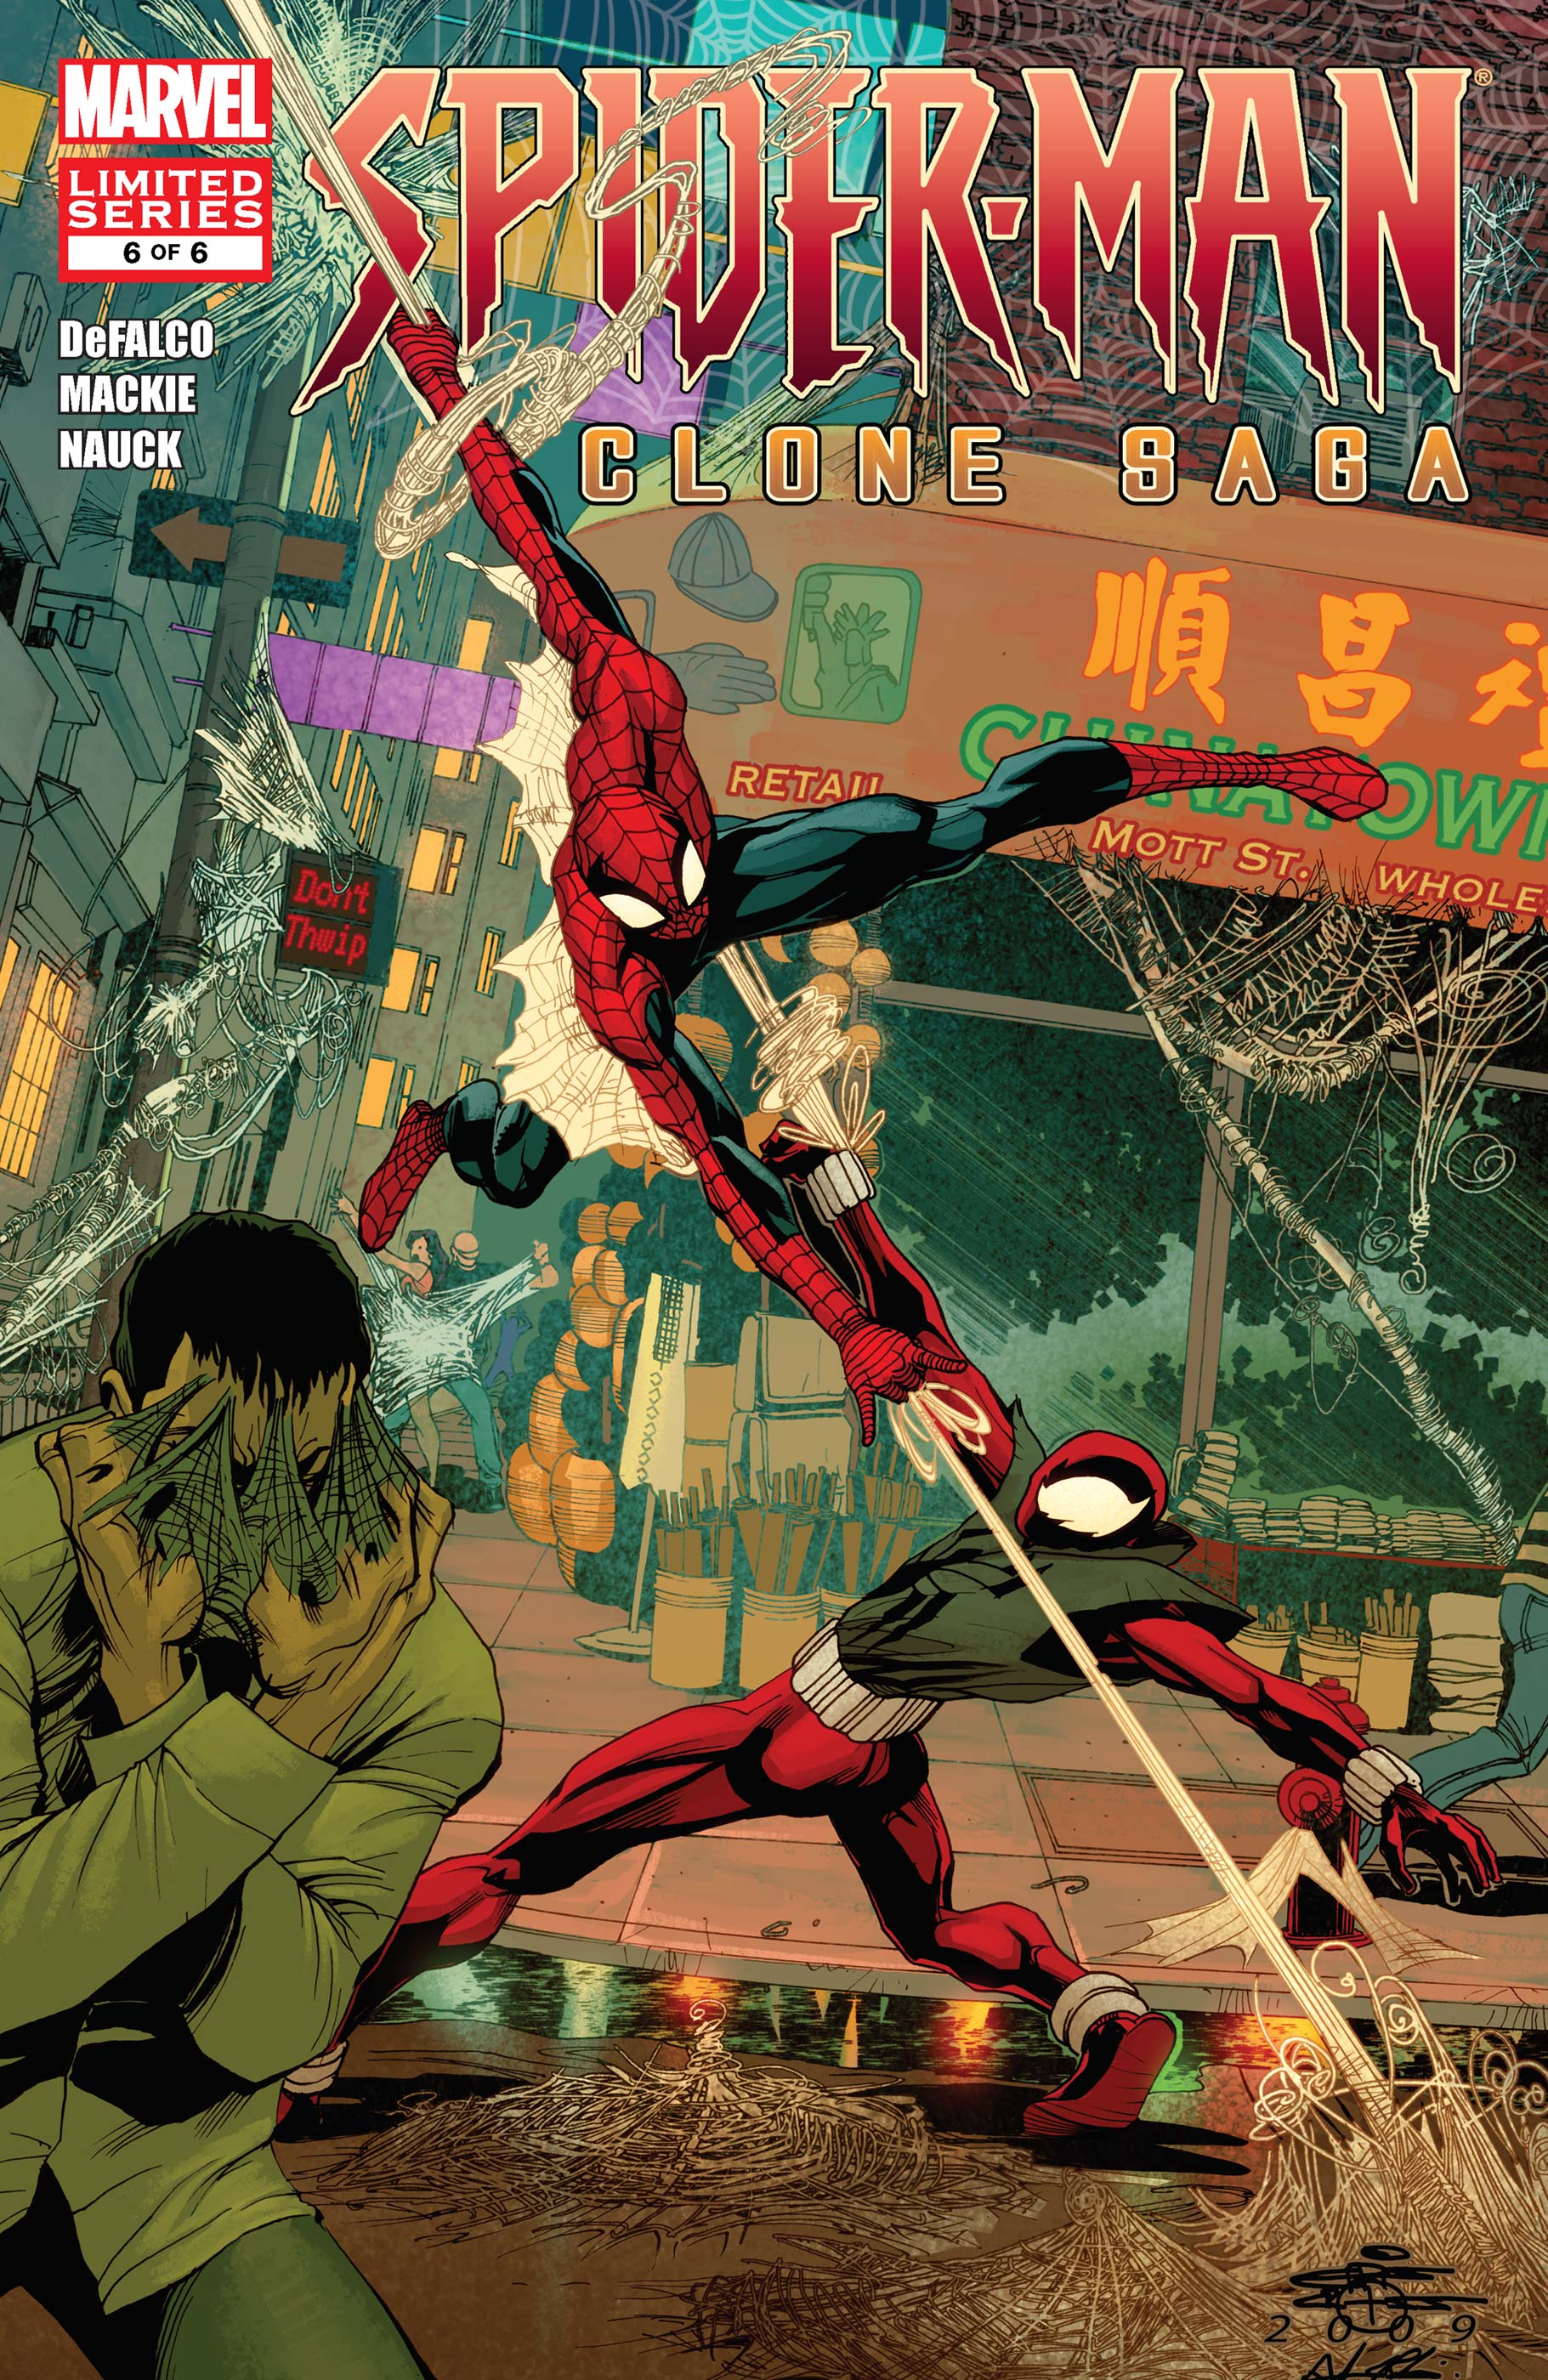 Spider-Man: The Clone Saga (2009) #6